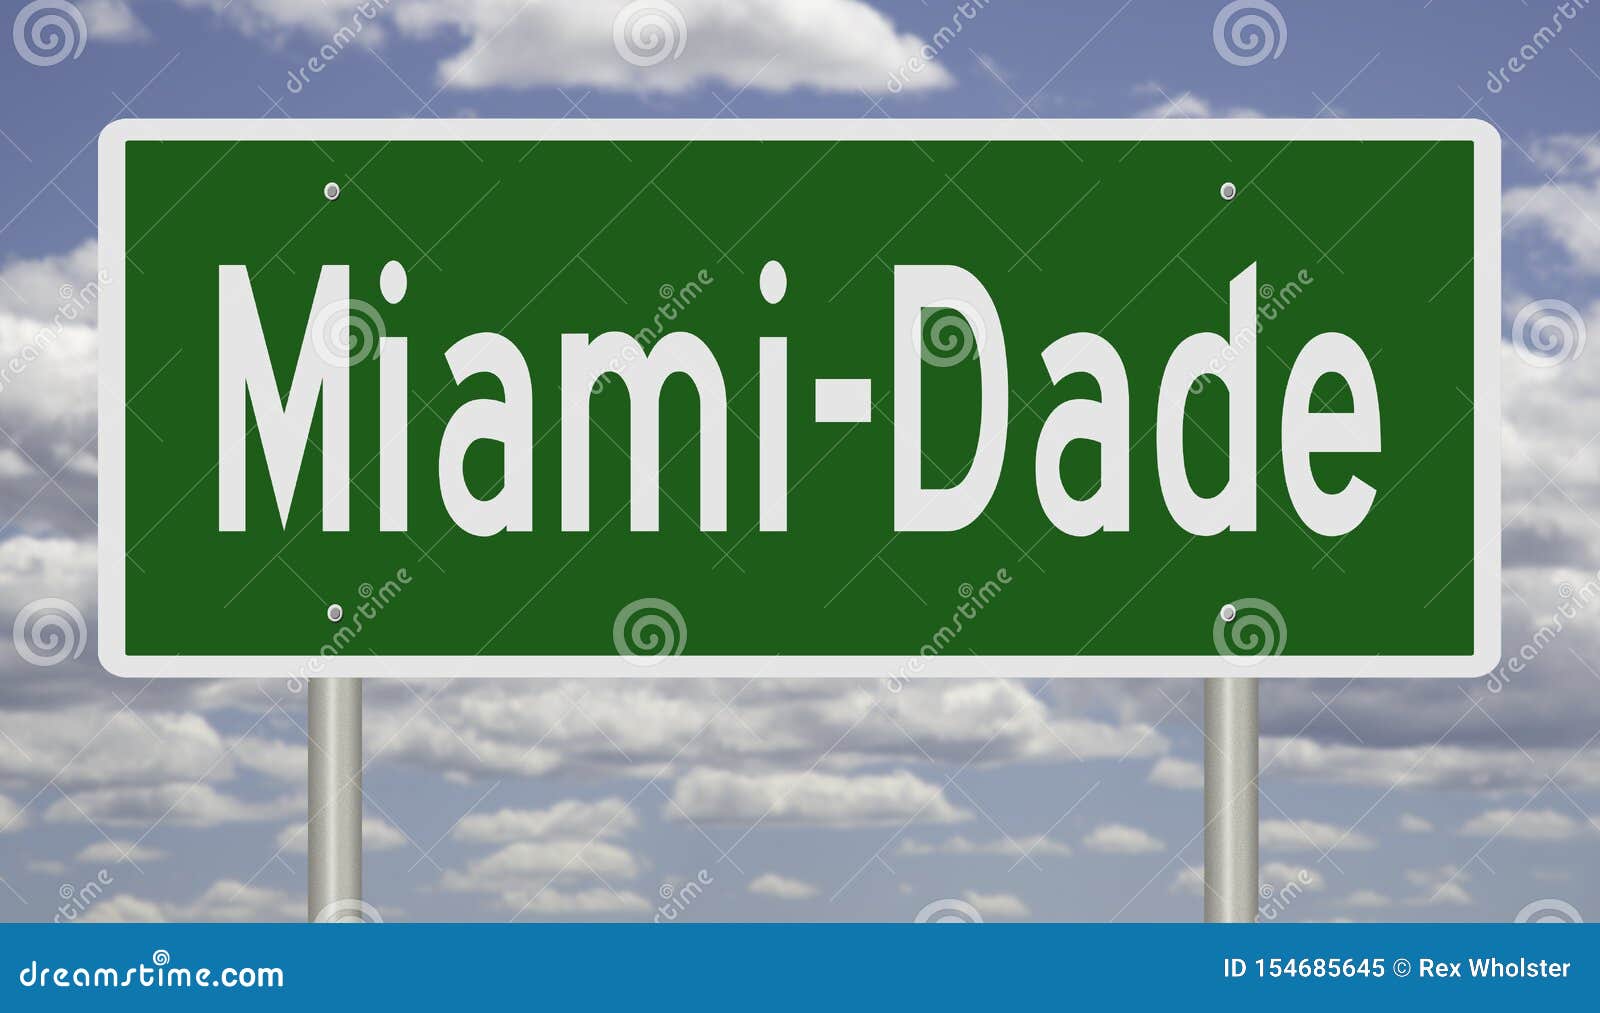 highway sign for miami-dade florida